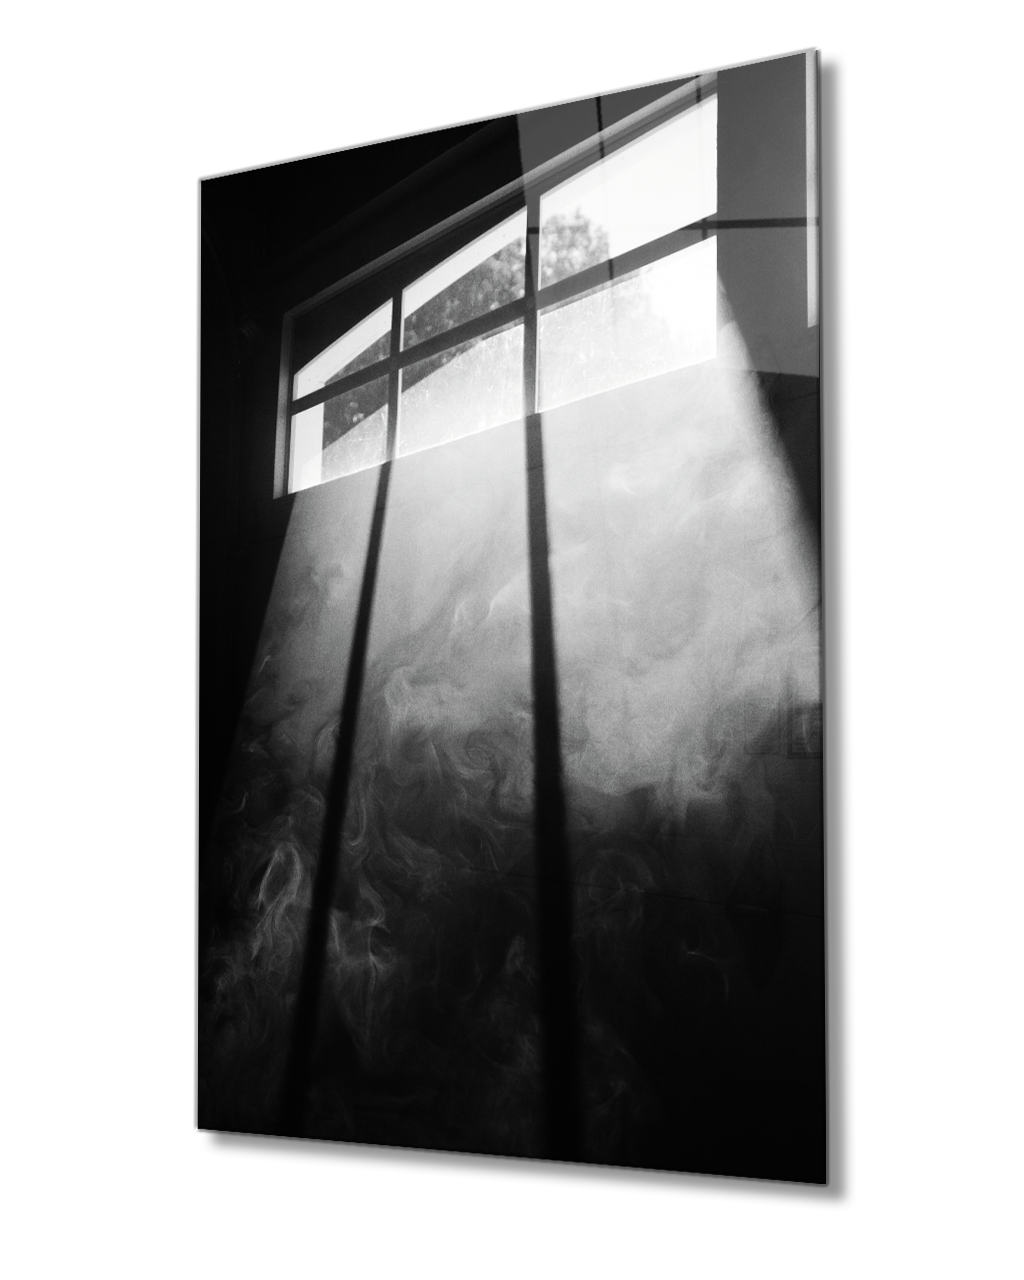 Siyah Beyaz Pencere Cam  Tablo 4mm Dayanıklı Temperli Cam Black and White Window Picture Glass Painting